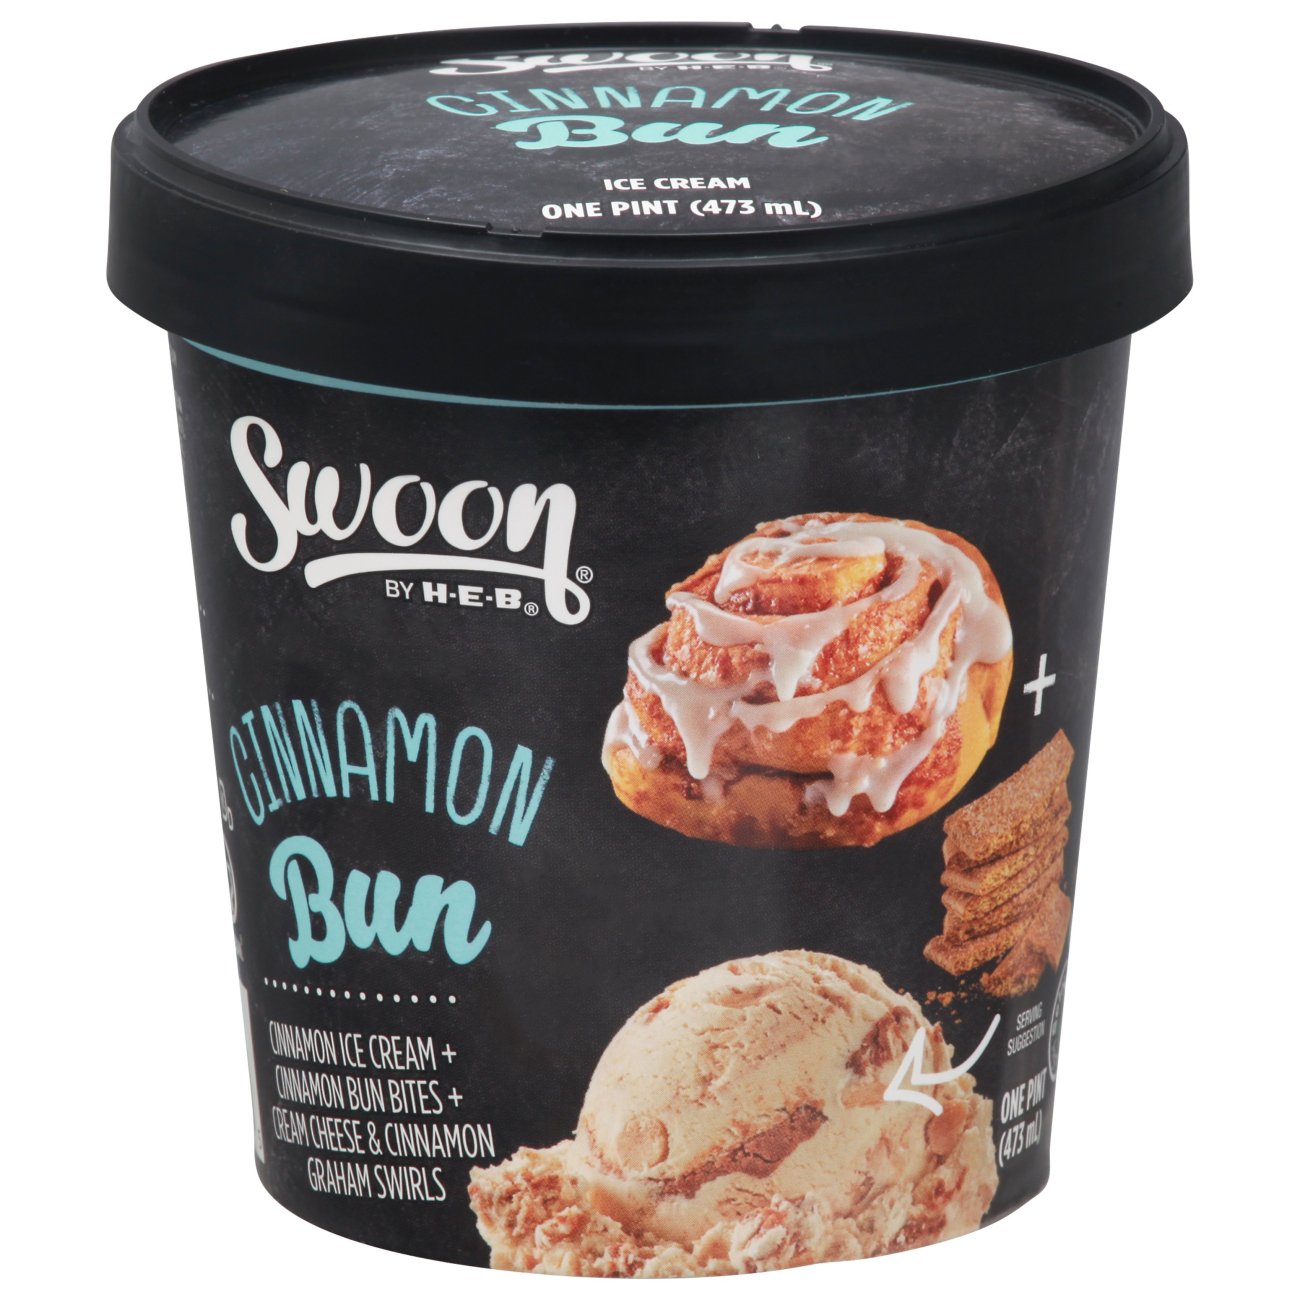 Swoon by H-E-B Cinnamon Buns Ice Cream - Shop Ice Cream at H-E-B